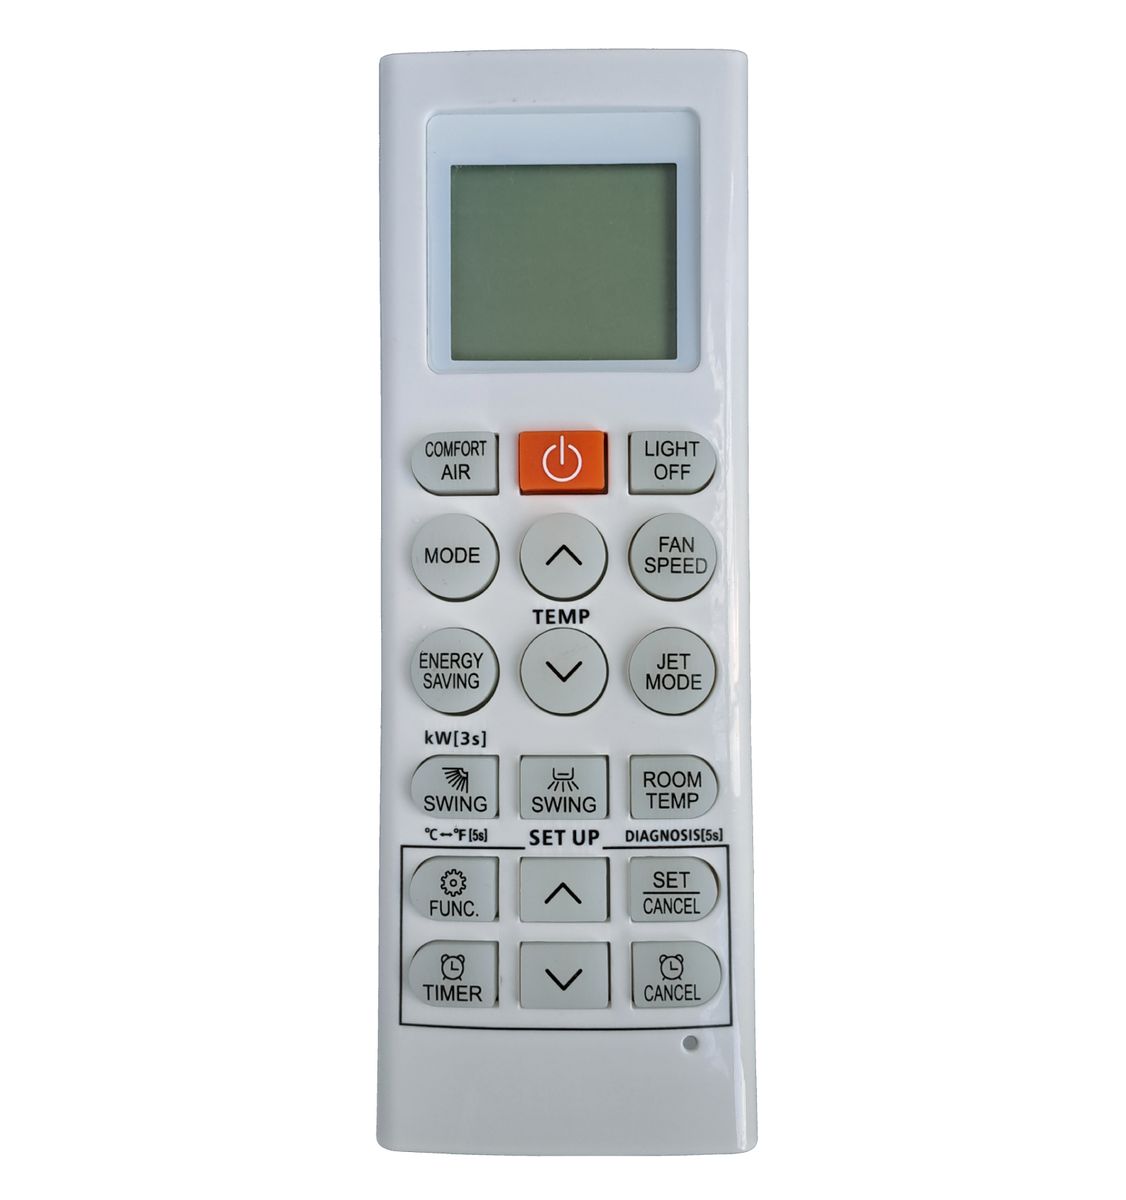 LG AKB74955604 - mando a distancia de reemplazo - $21.2 : REMOTE CONTROL  WORLD